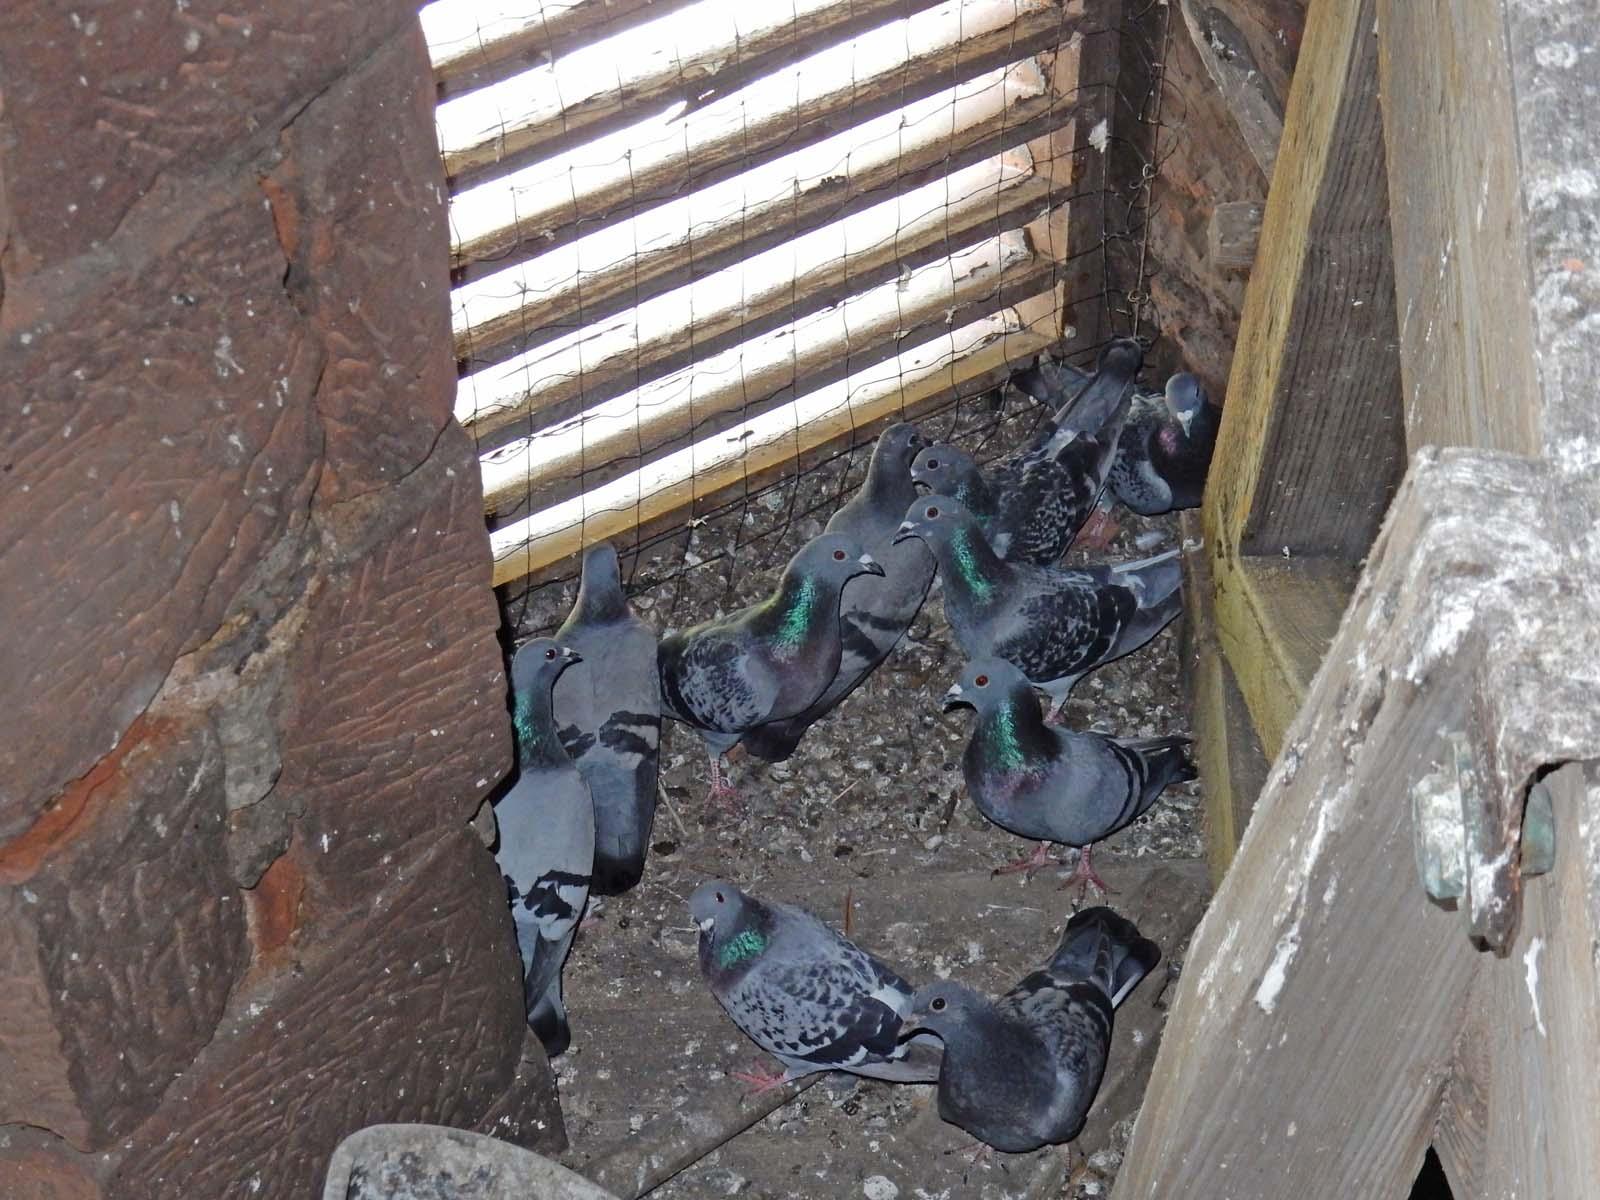 pigeons living inside steeple